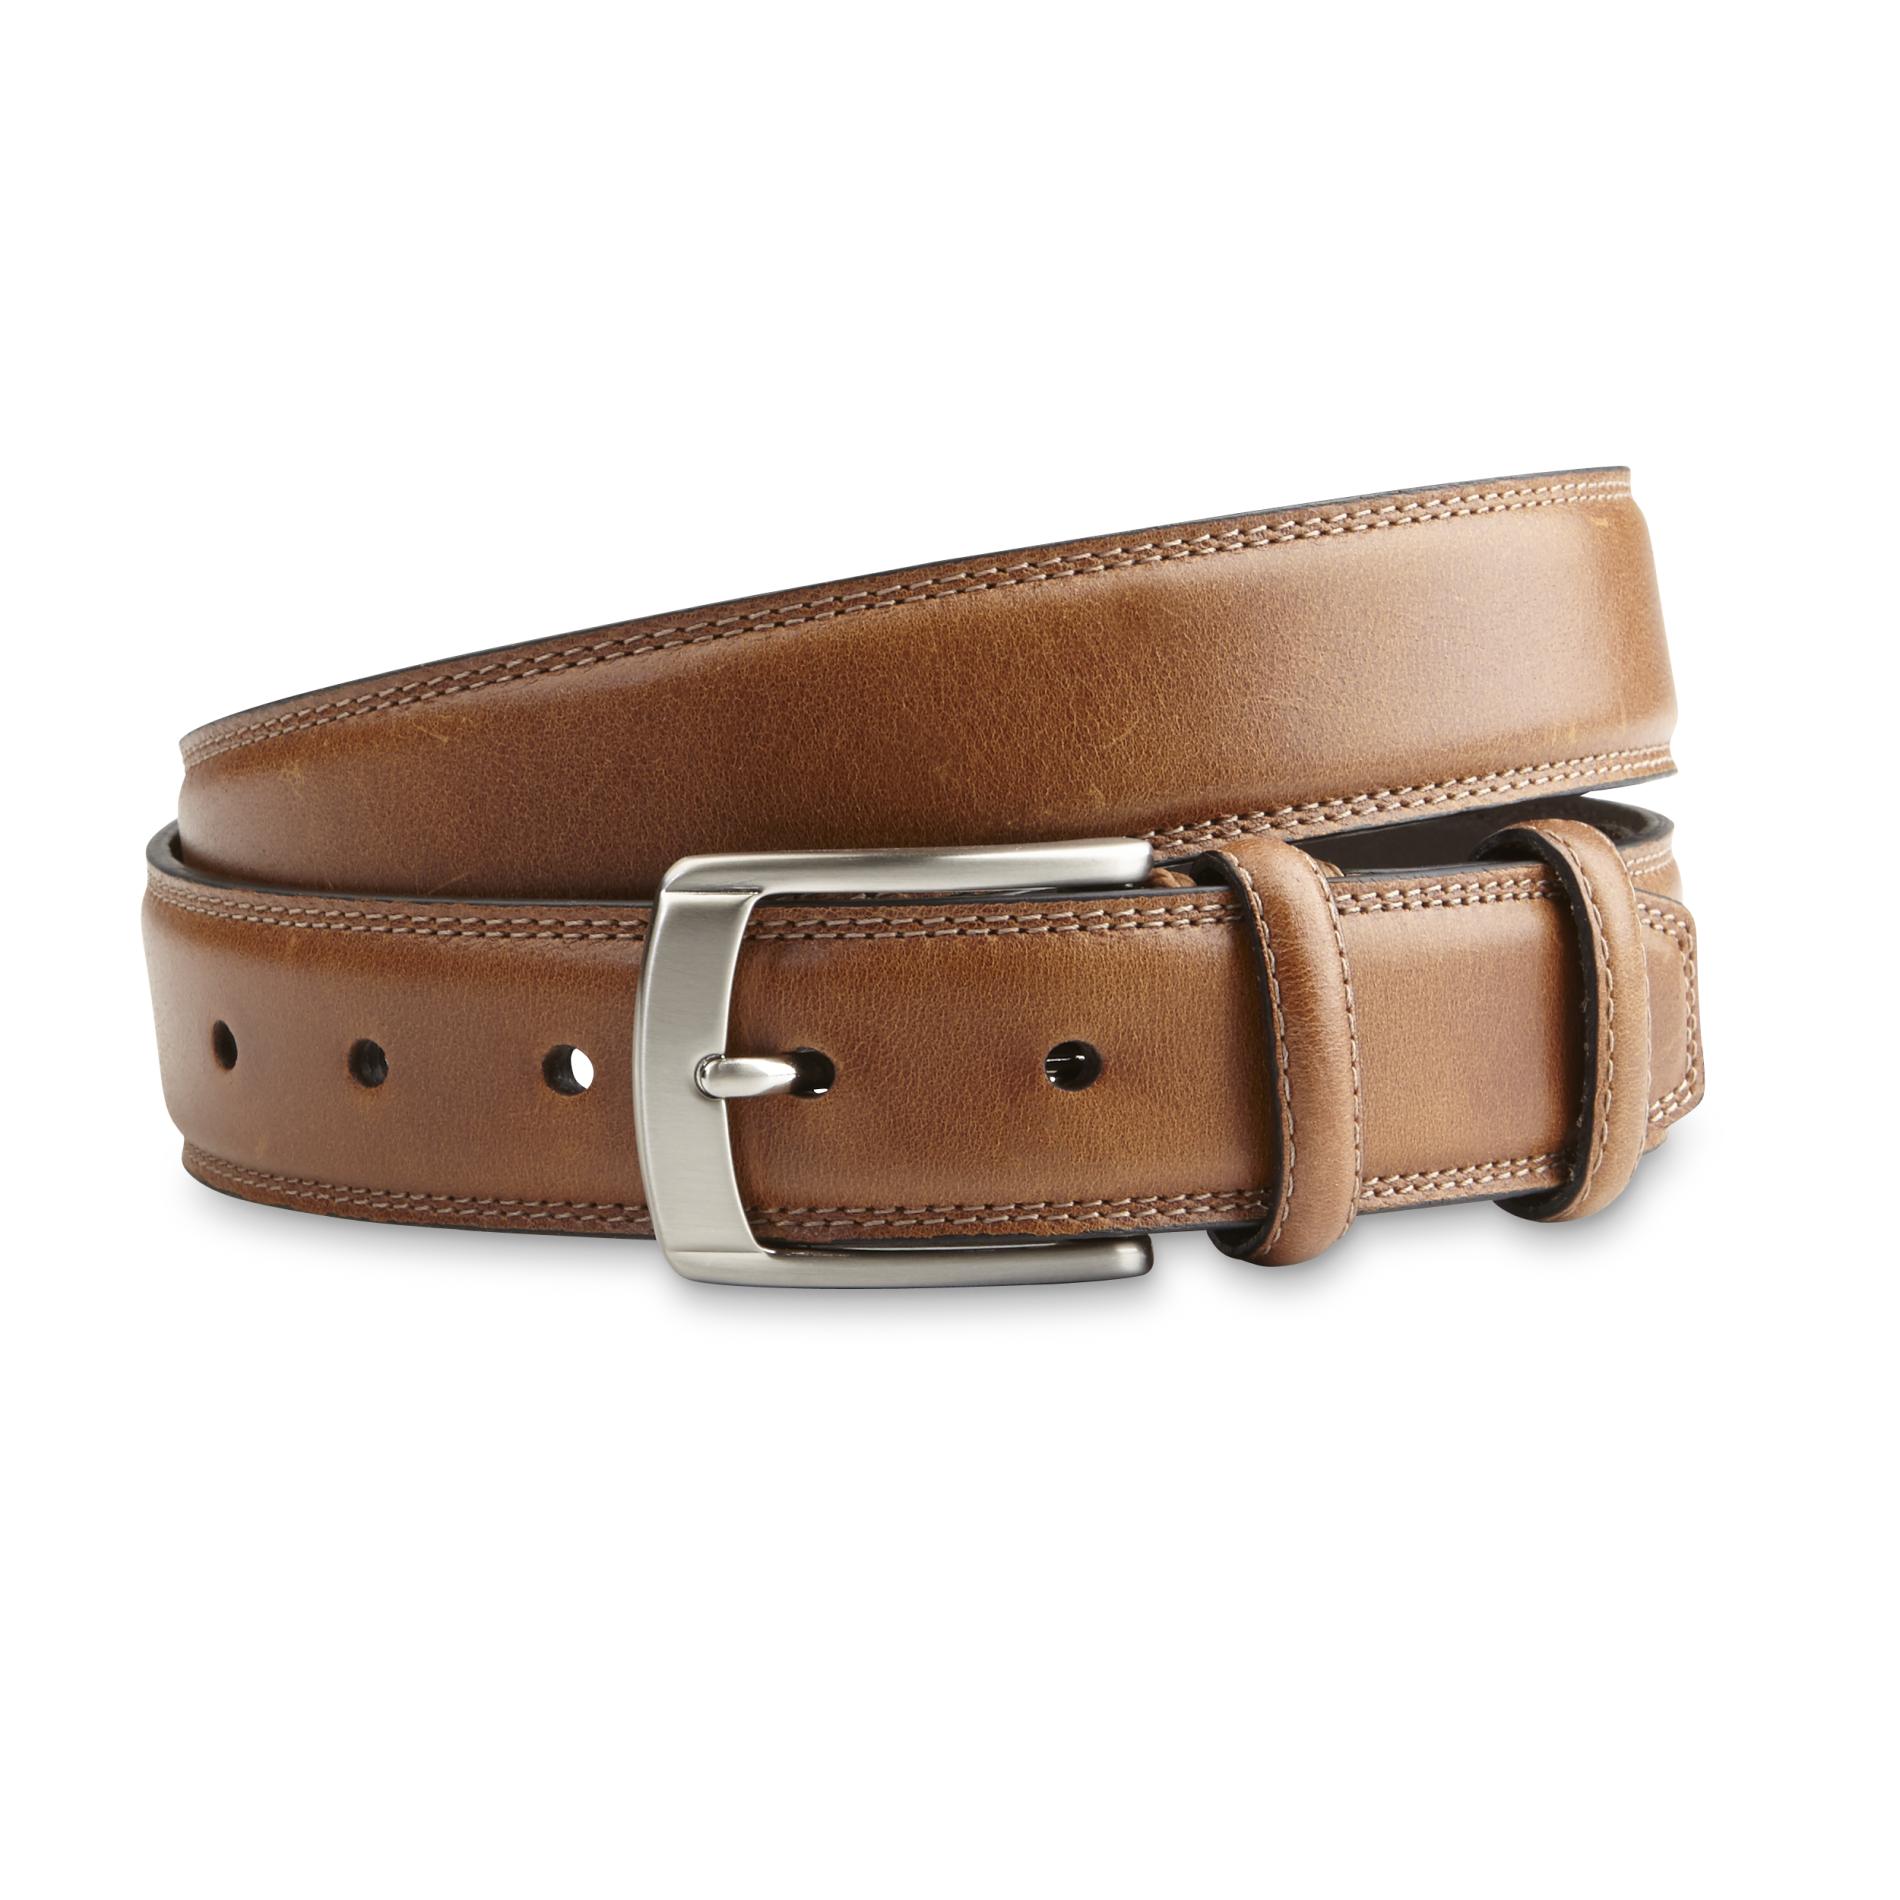 Dockers Men's Handcrafted Leather Belt